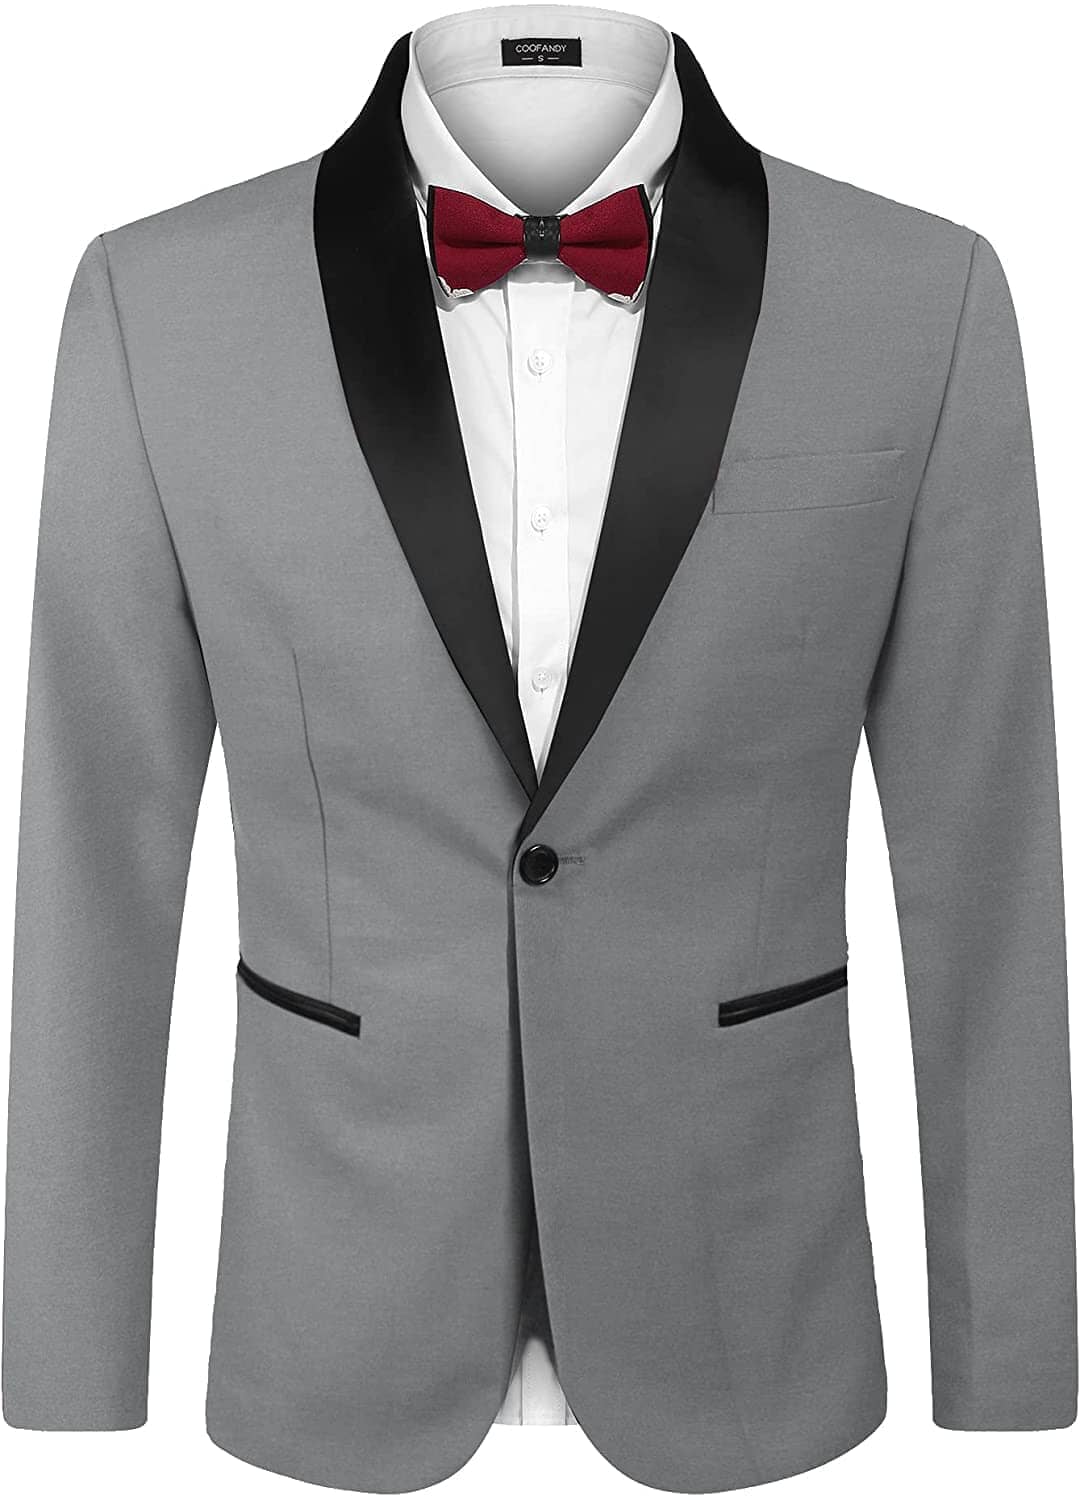 Coofandy Slim Fit Wedding Blazer (US Only) Blazer coofandy Light Gray S 